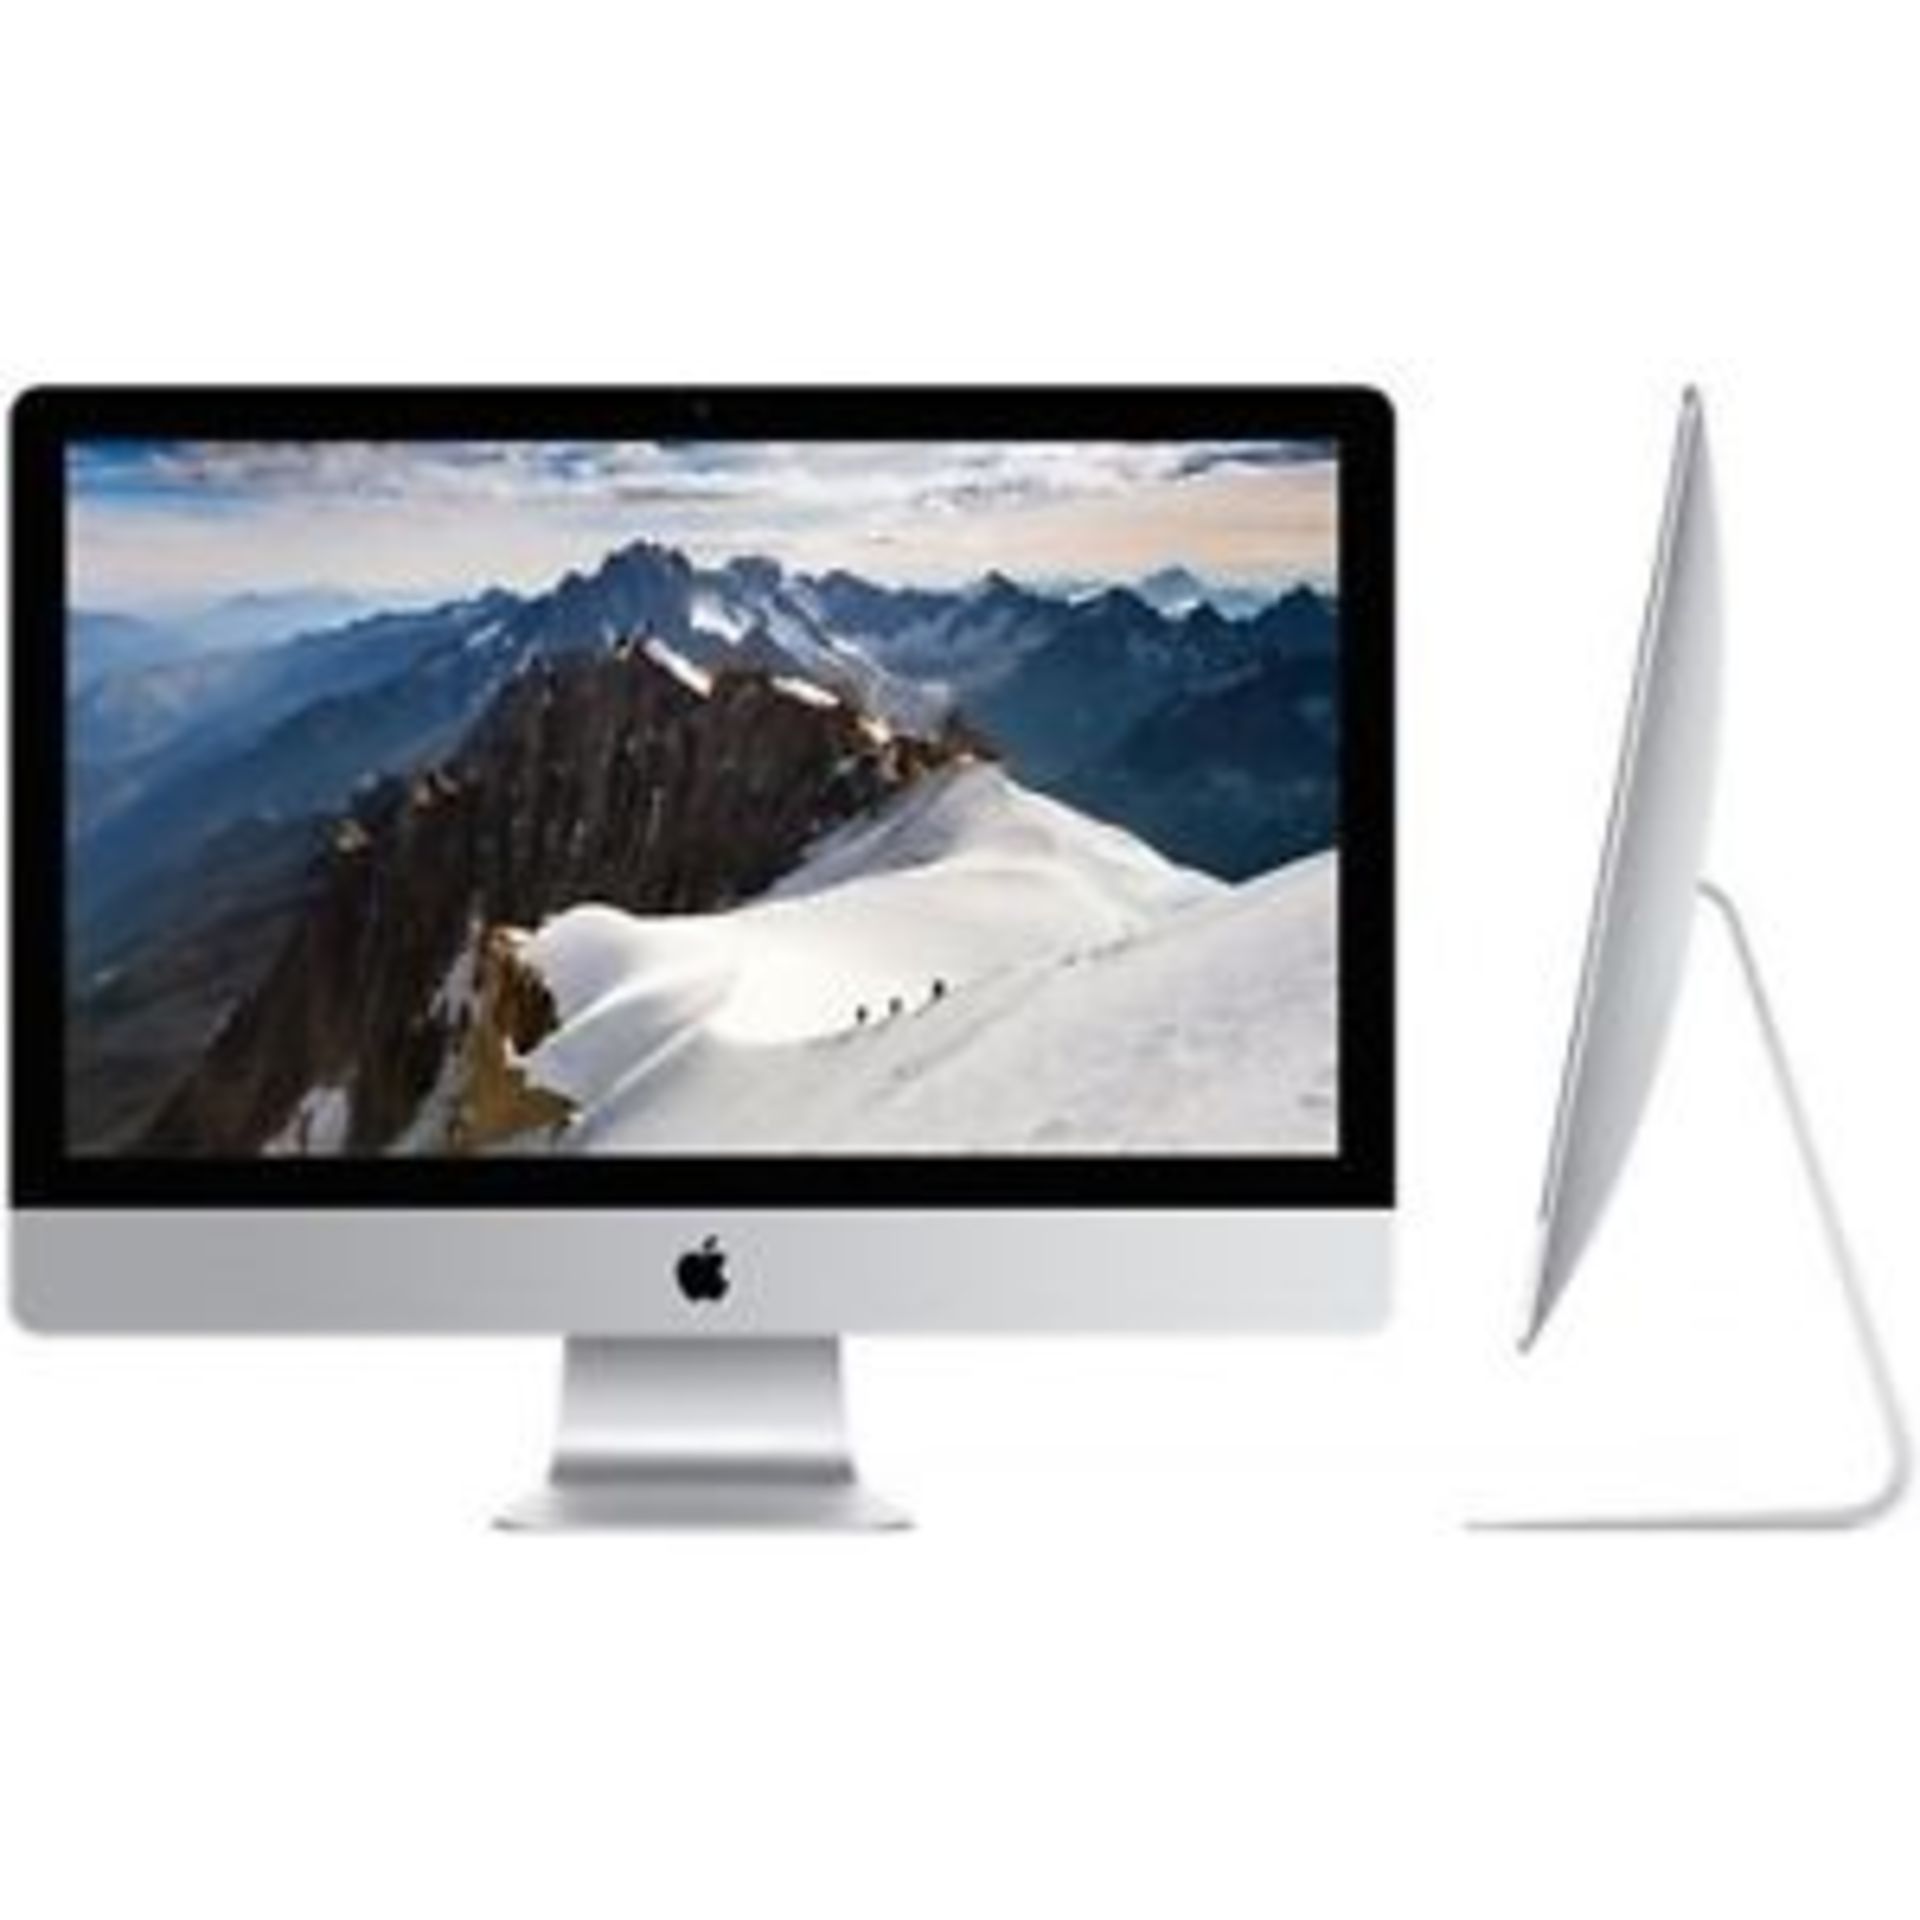 + VAT Grade B Apple iMac Super Slim A1418 2014 - Core i5 - 1.4Ghz 4th Gen - 8GB - 500GB HDD - With